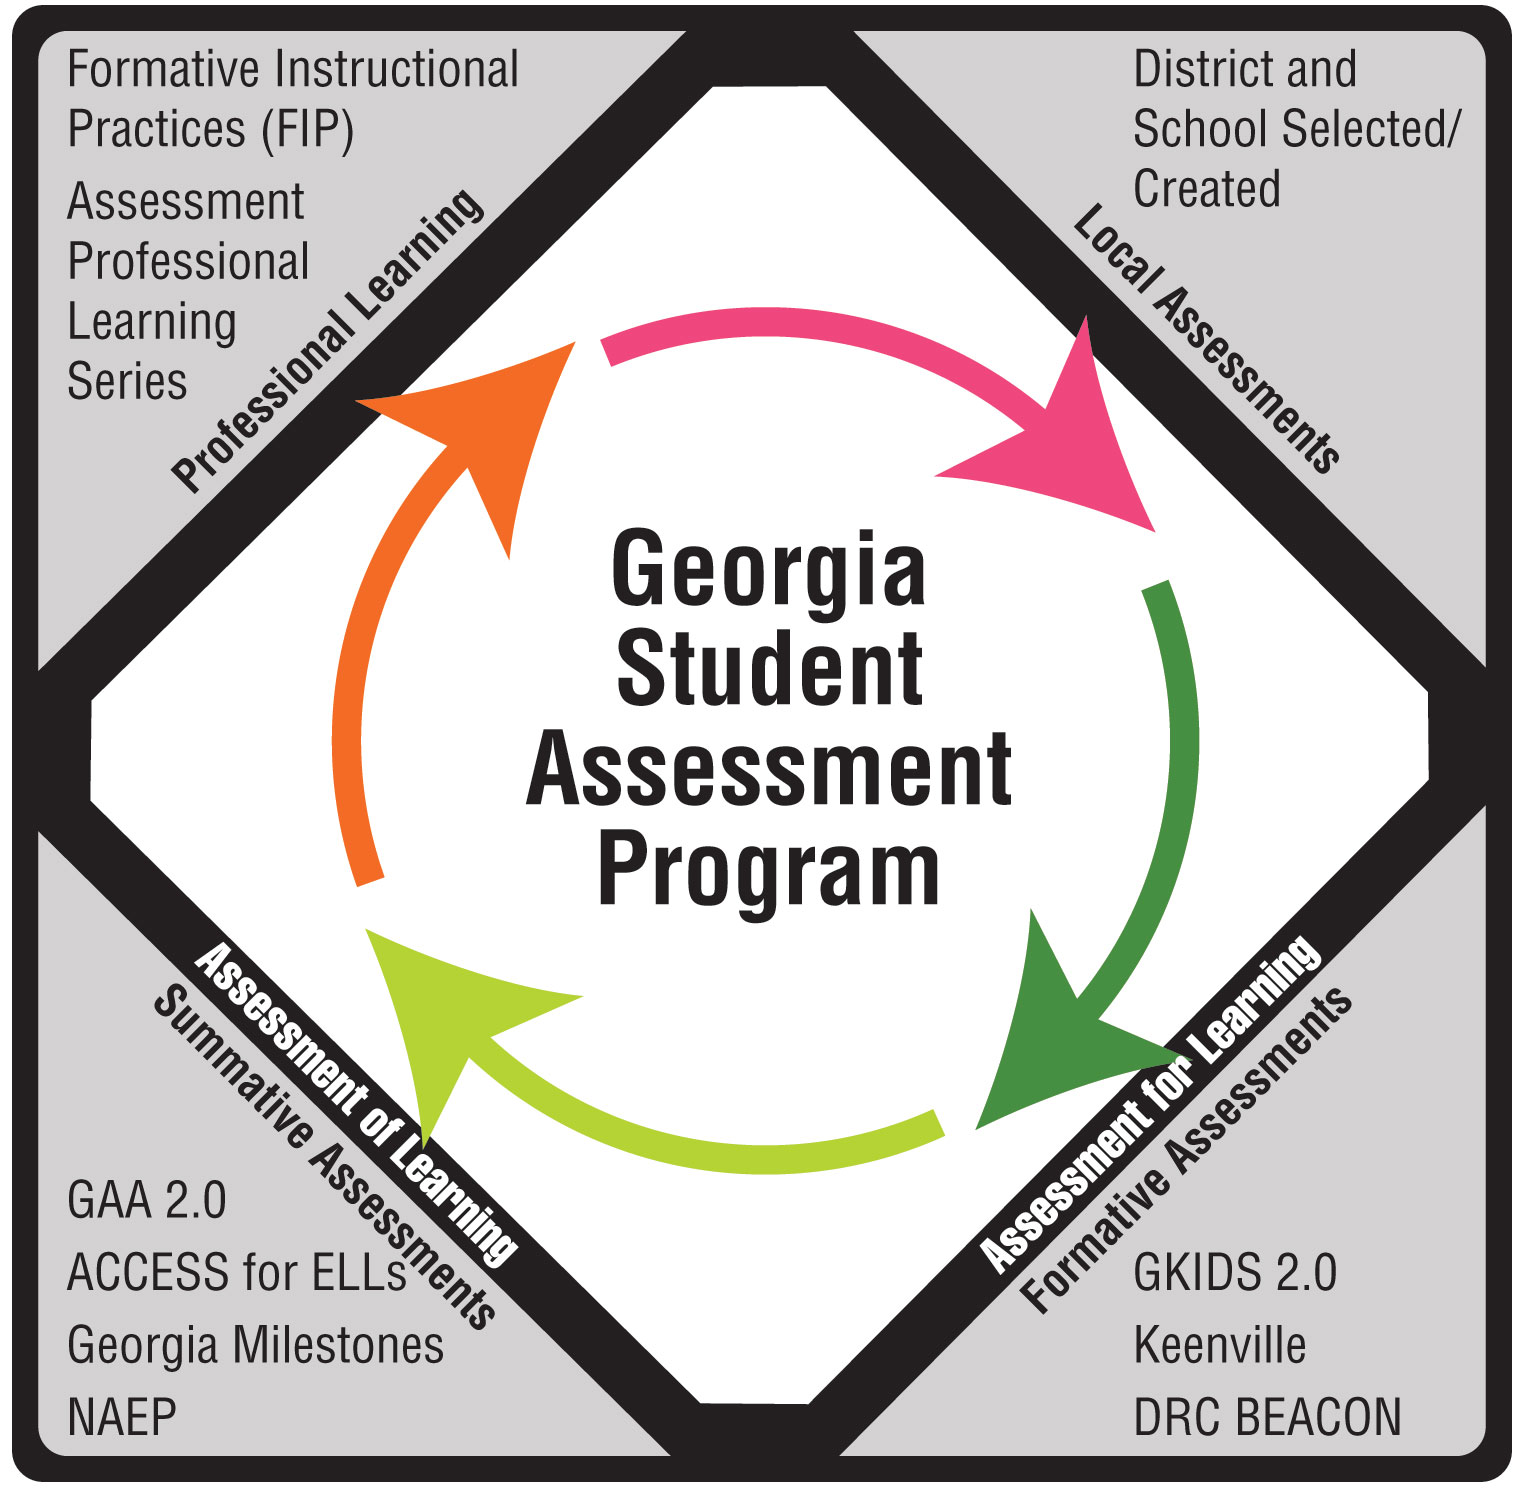 Georgia's Student Assessment Program